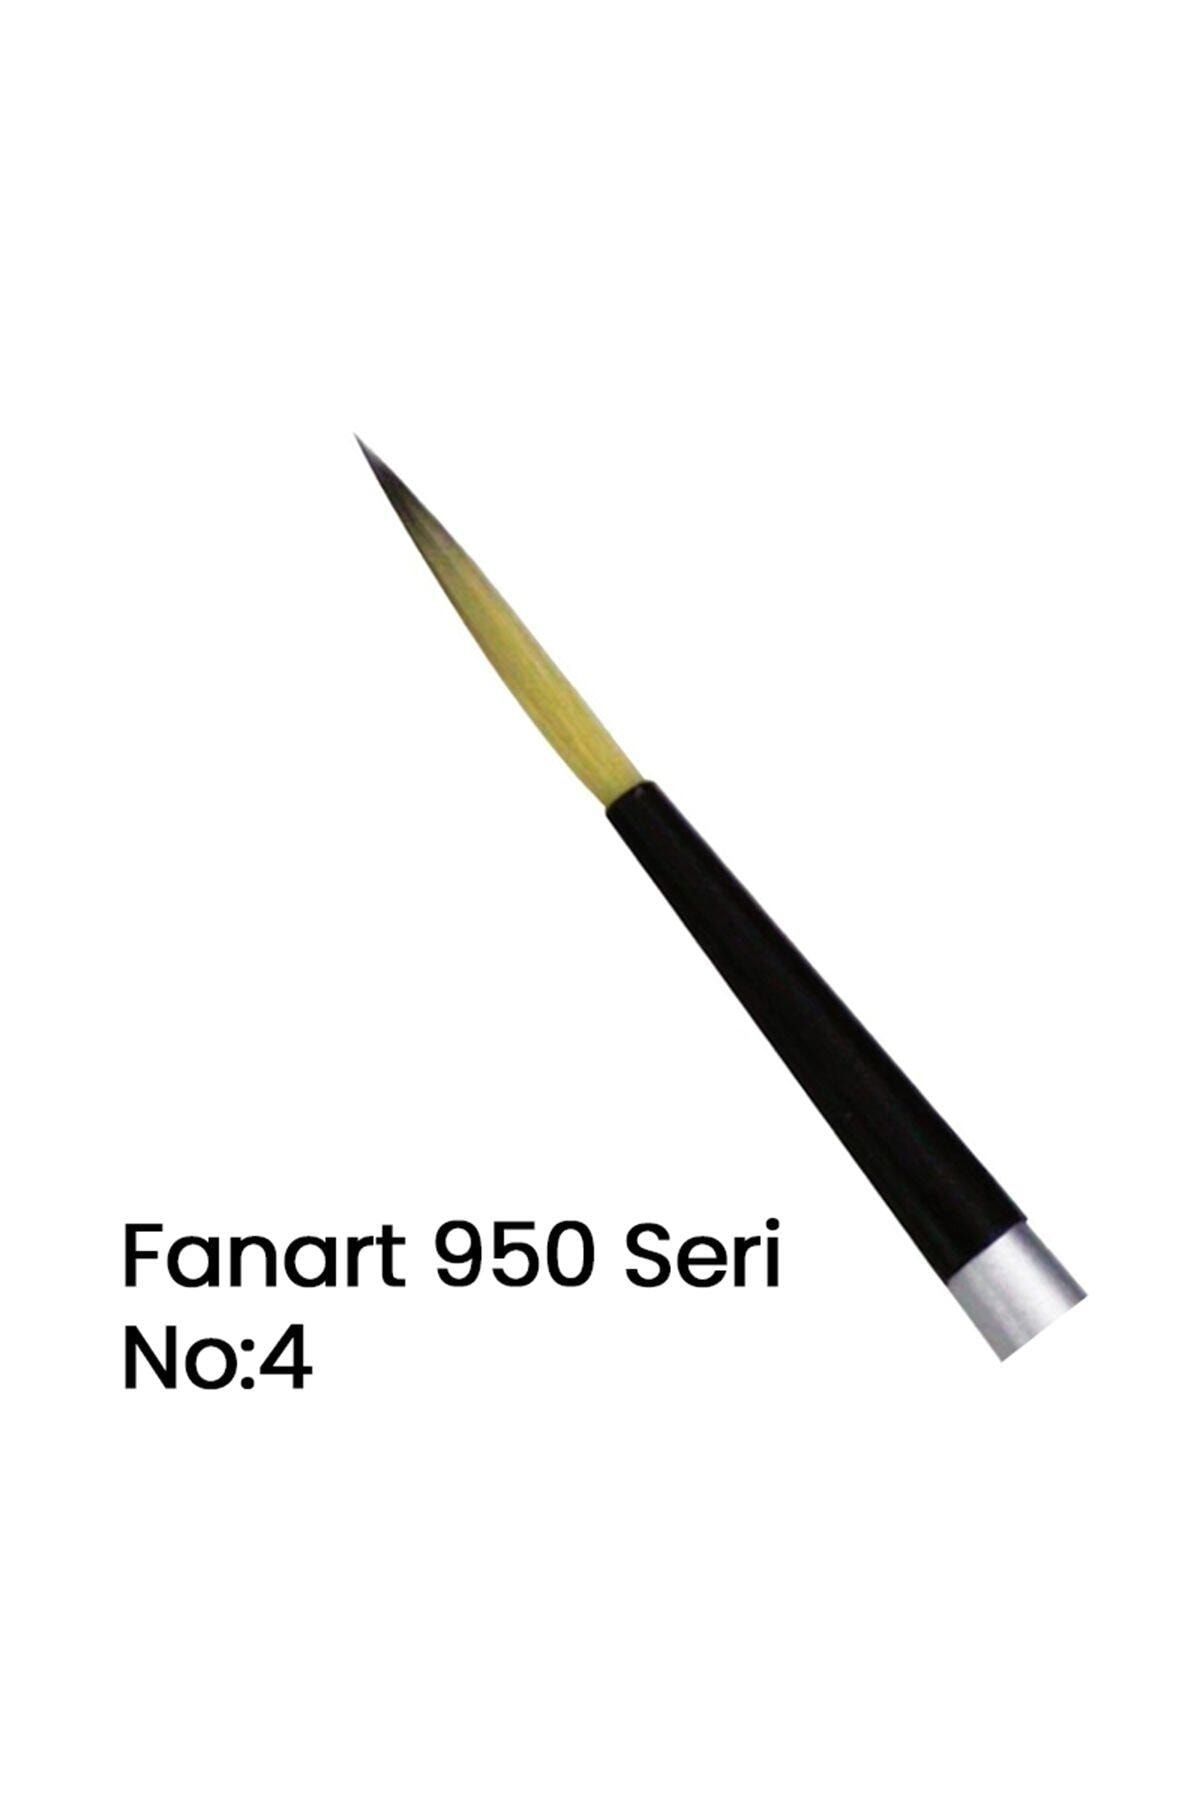 Fanart 950 Seri Çizgi Fırça No 4